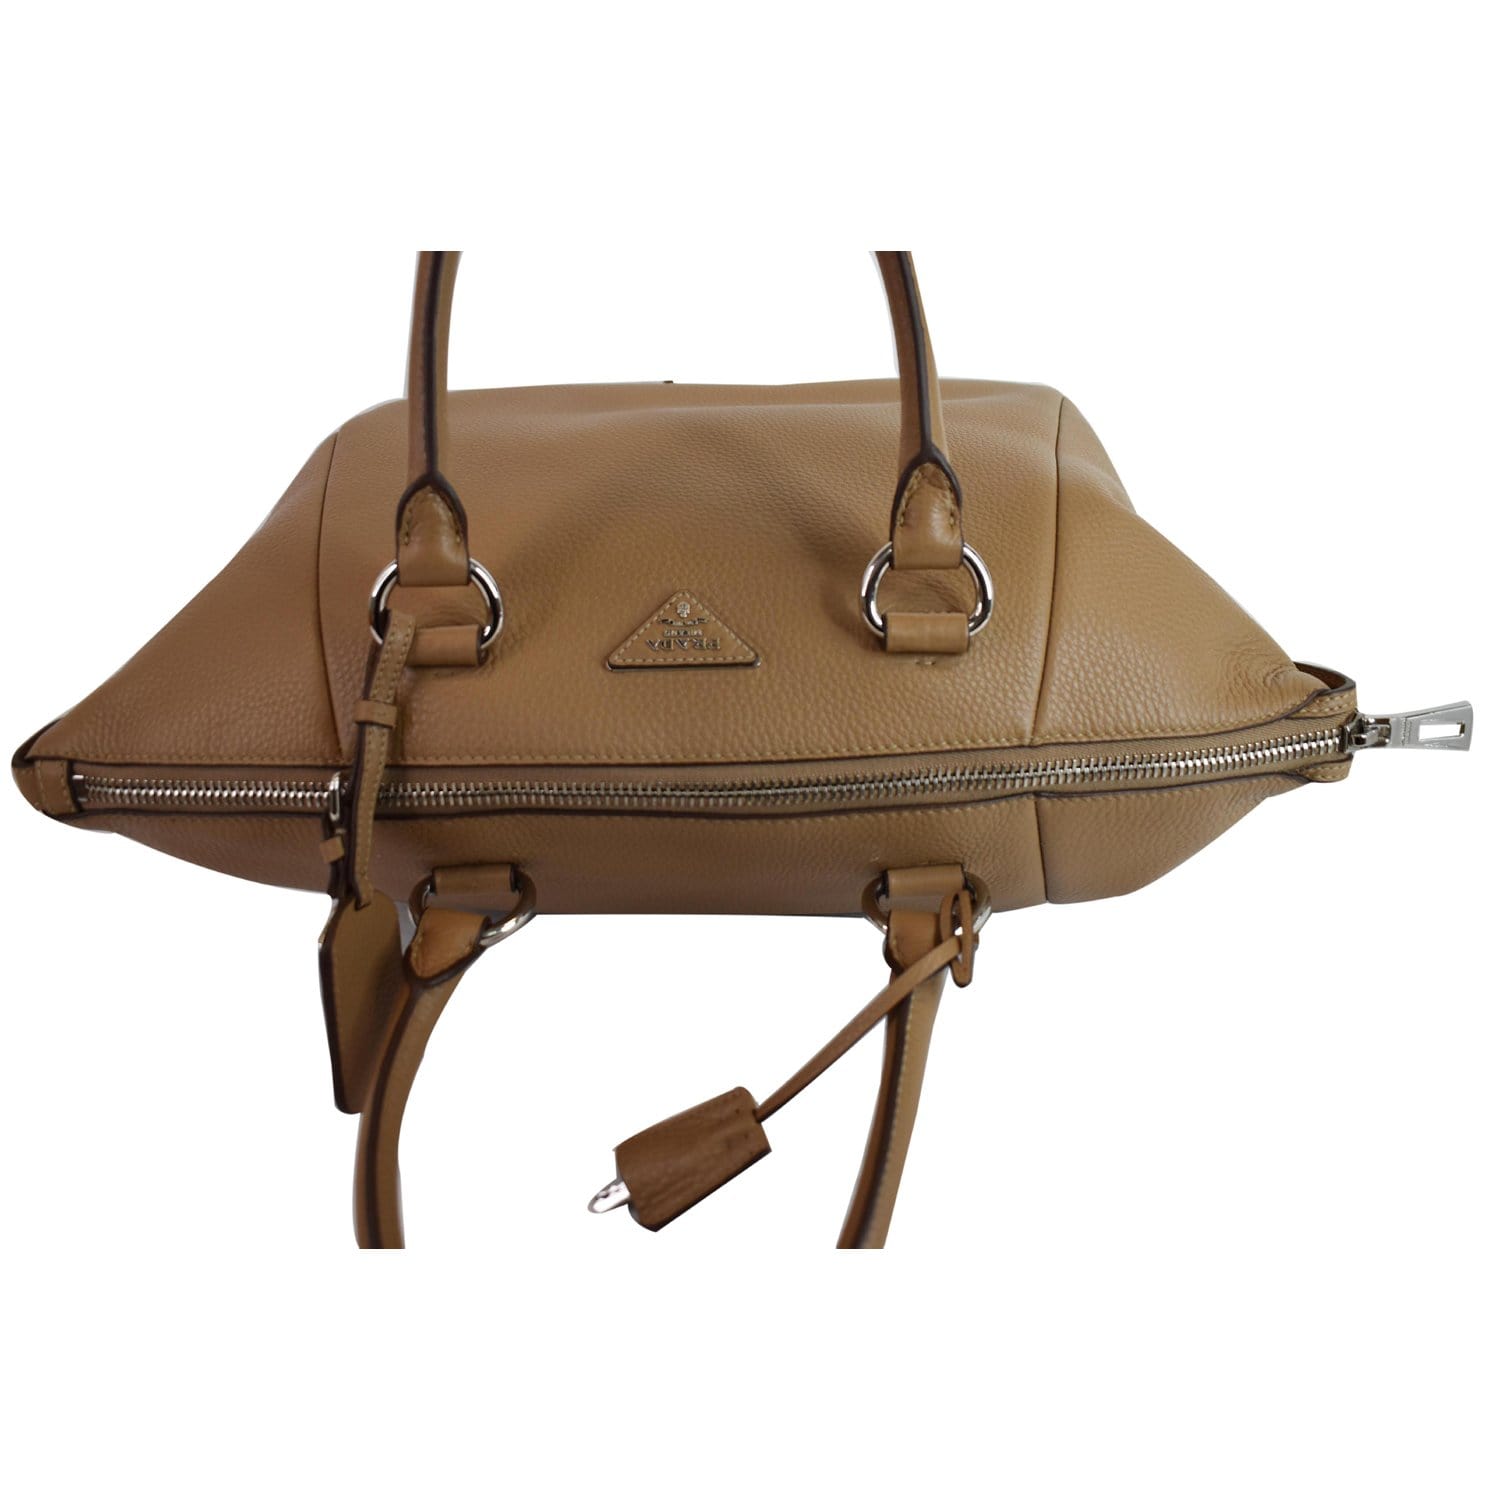 Prada Leather brown bucket bag